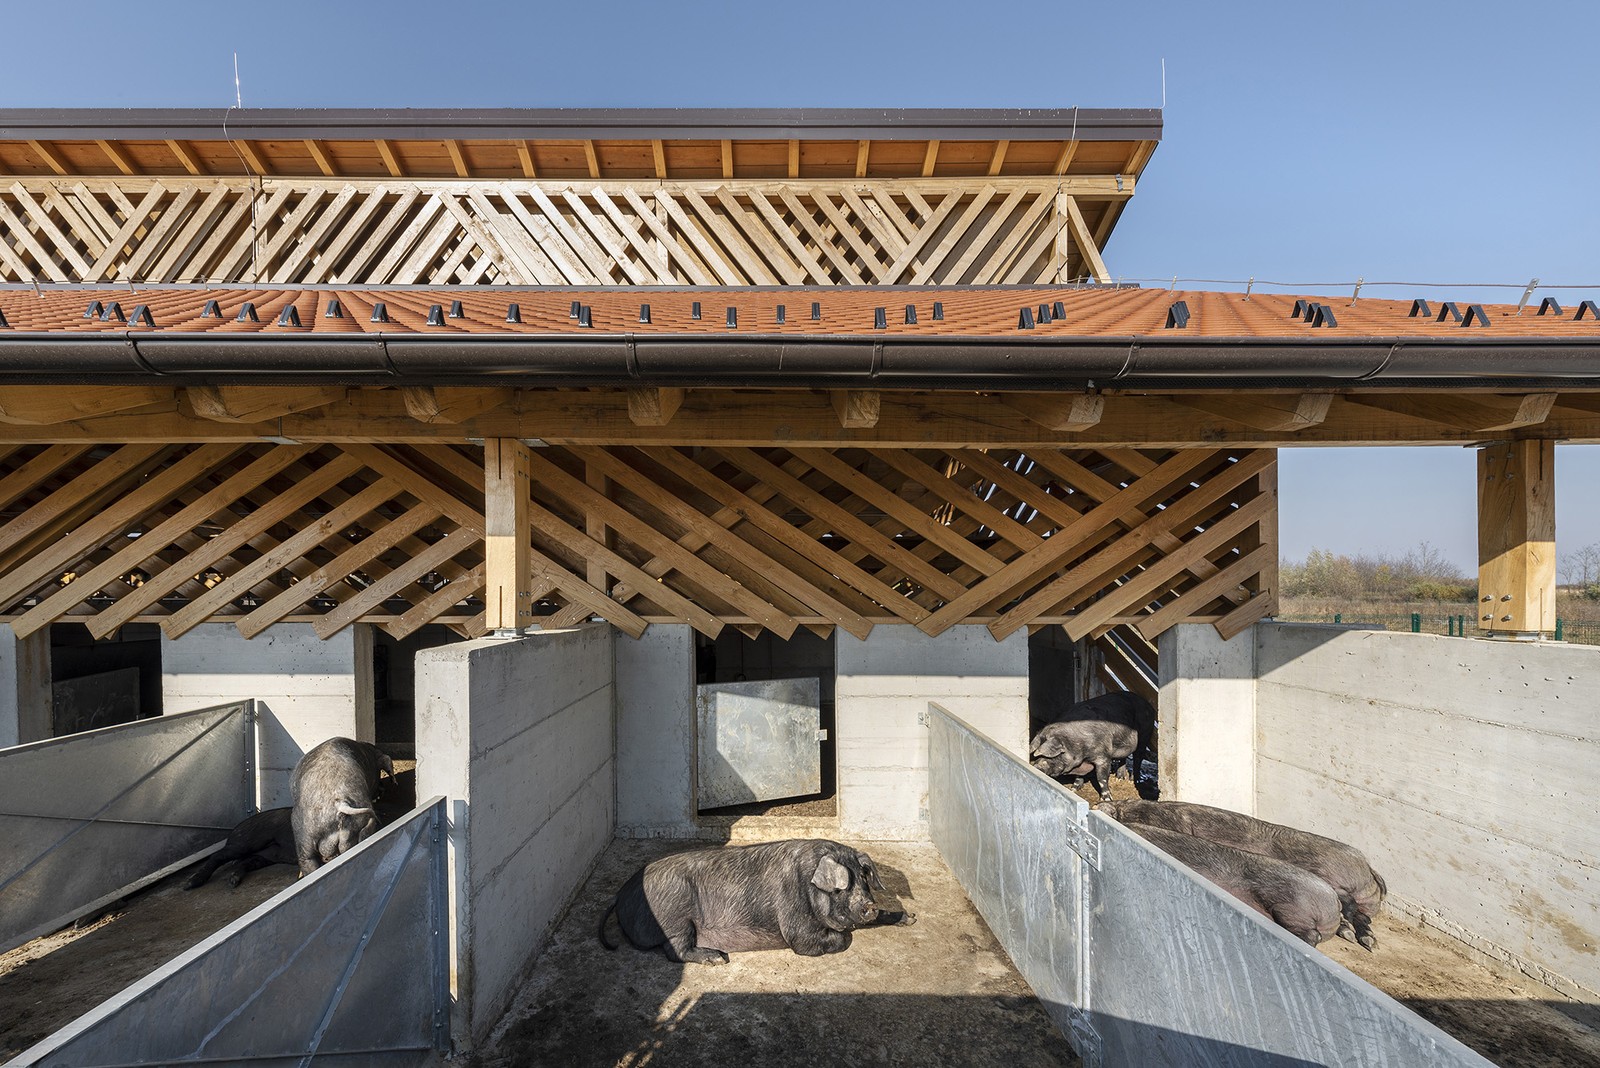 Fazenda de porcos de Domagoj Vida, zagueiro croata — Foto: Bosnic+Dorotic